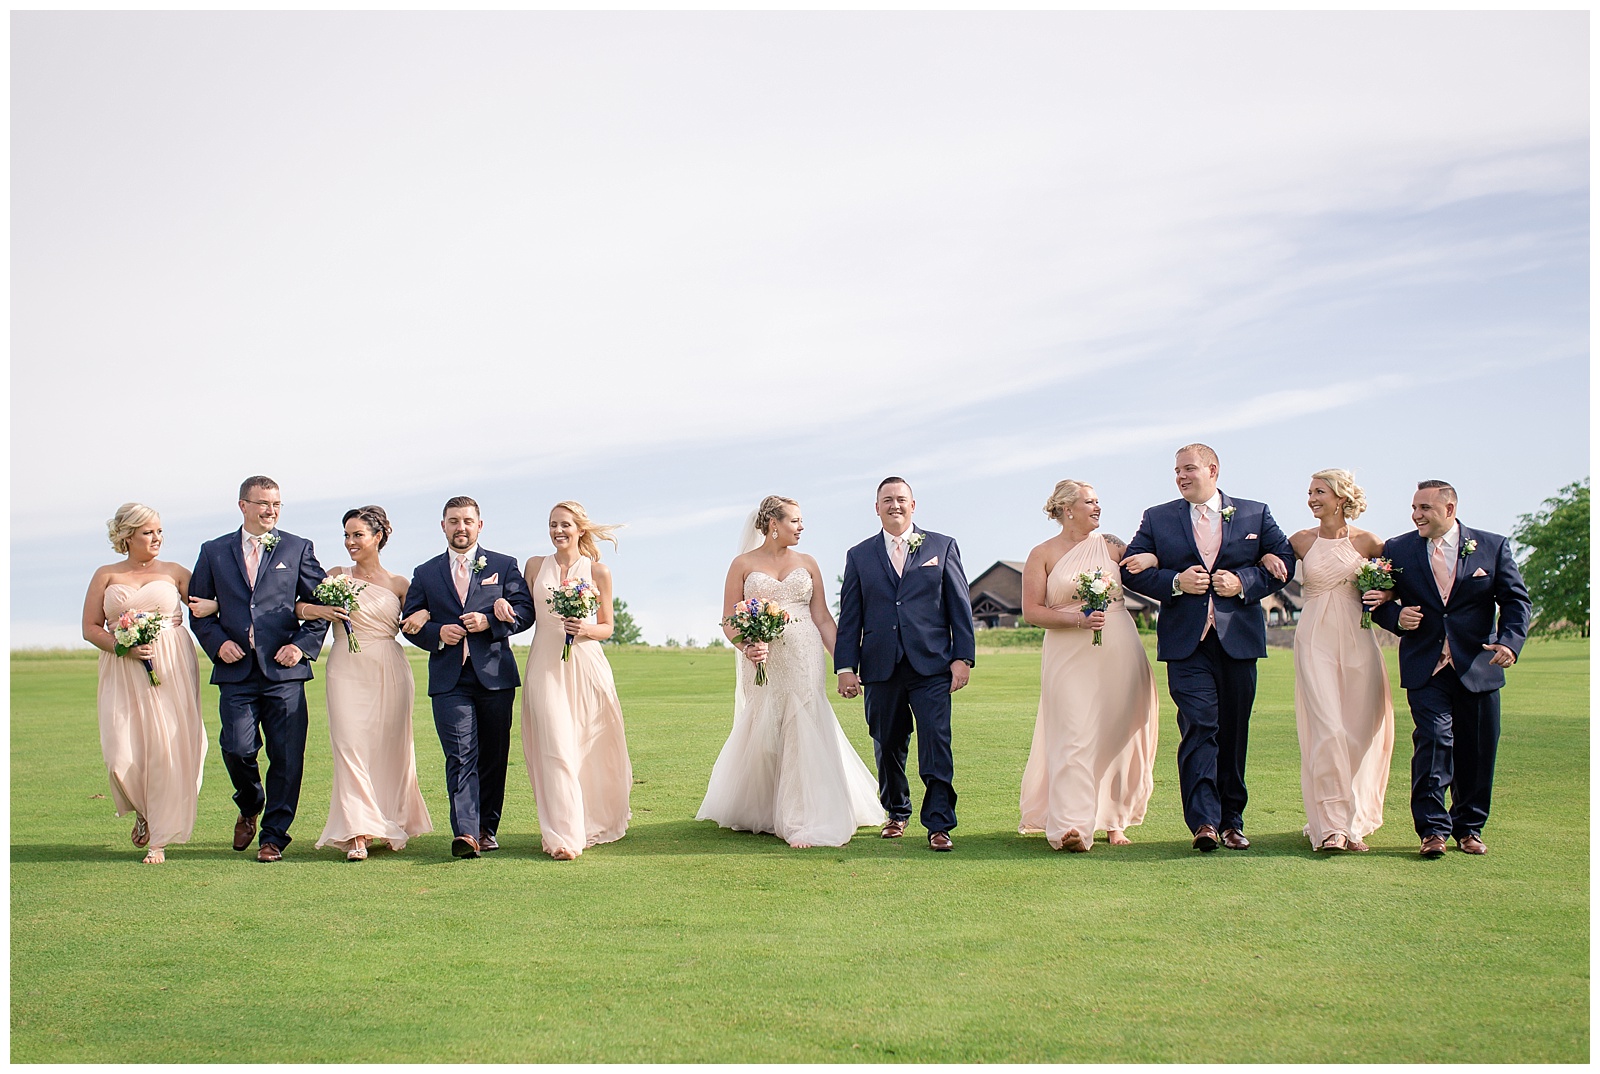 Wedding photography at Staley Farms Golf Club in Kansas City by Wisdom-Watson Weddings.